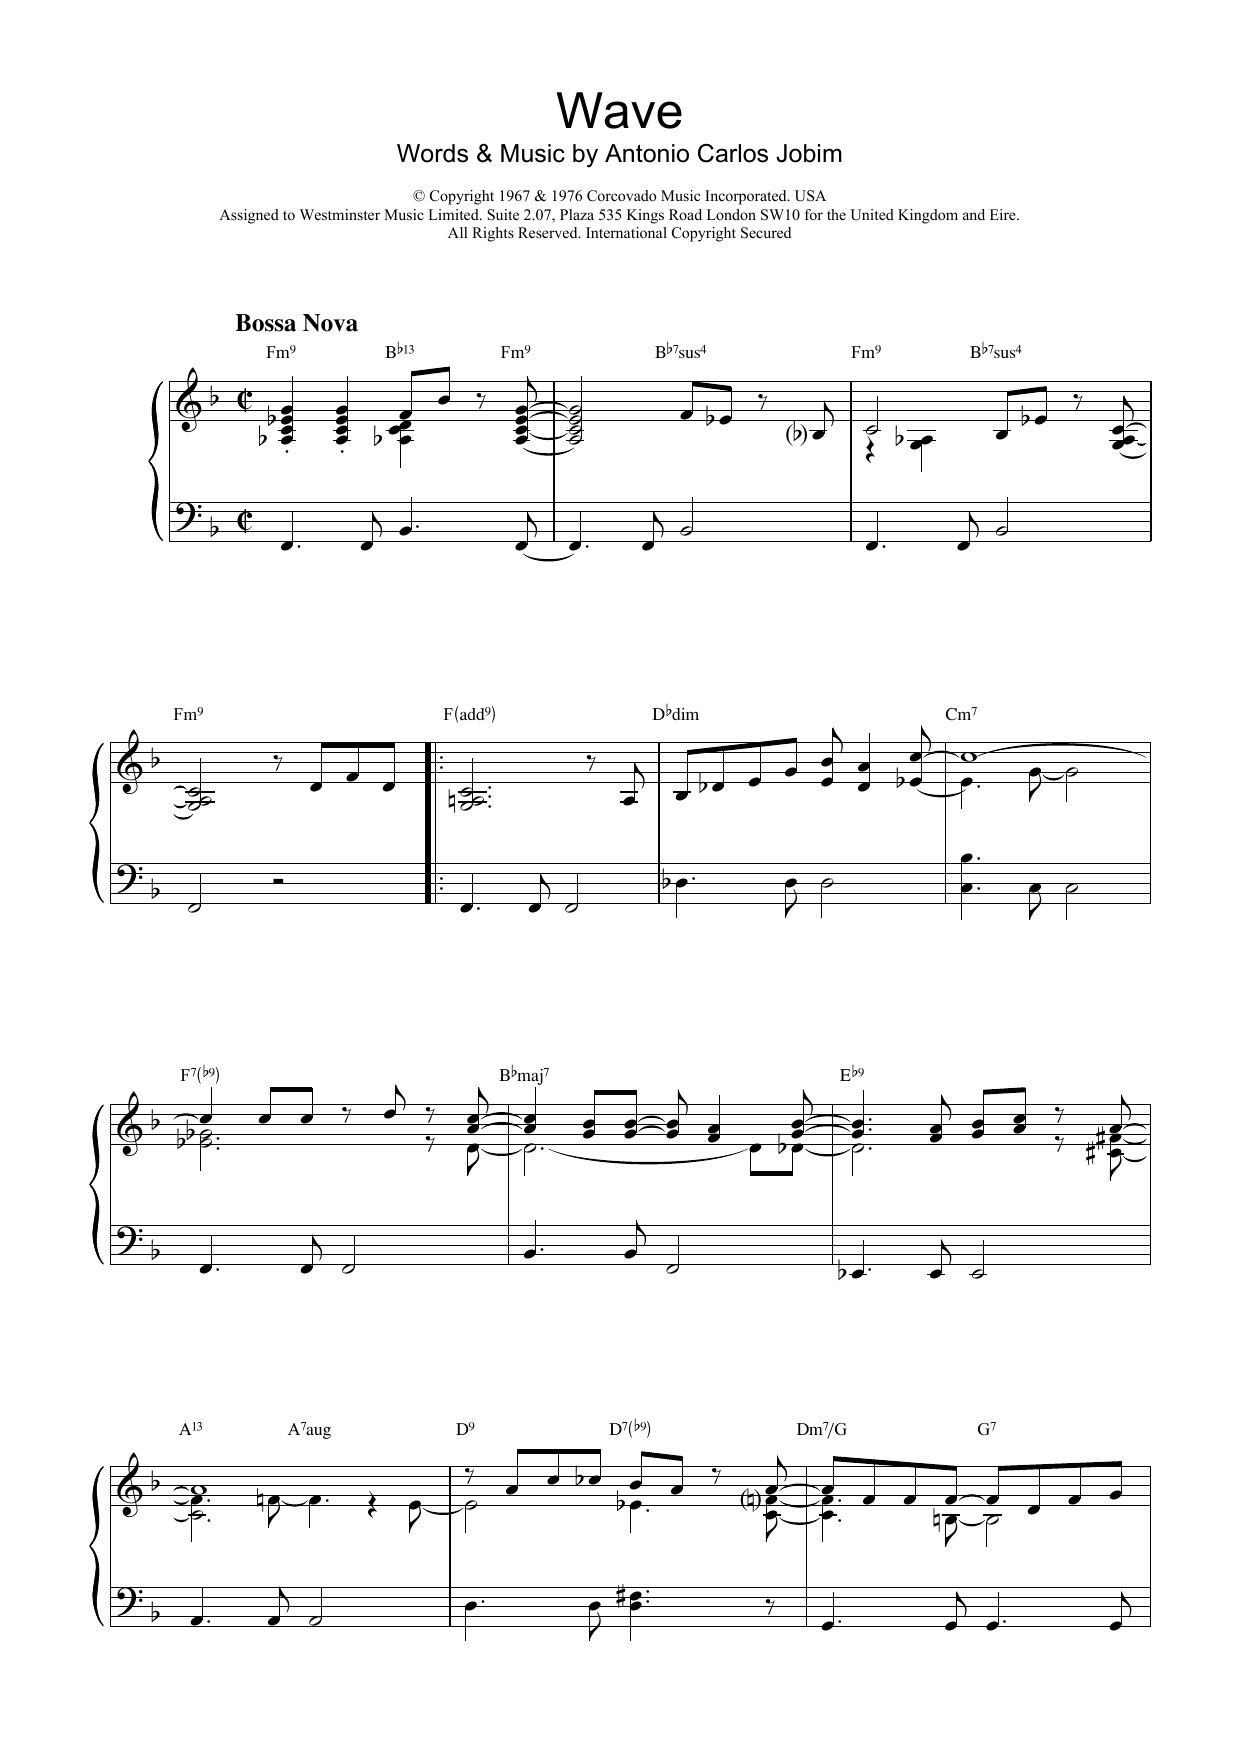 Antonio Carlos Jobim Wave Sheet Music Notes & Chords for Trombone - Download or Print PDF